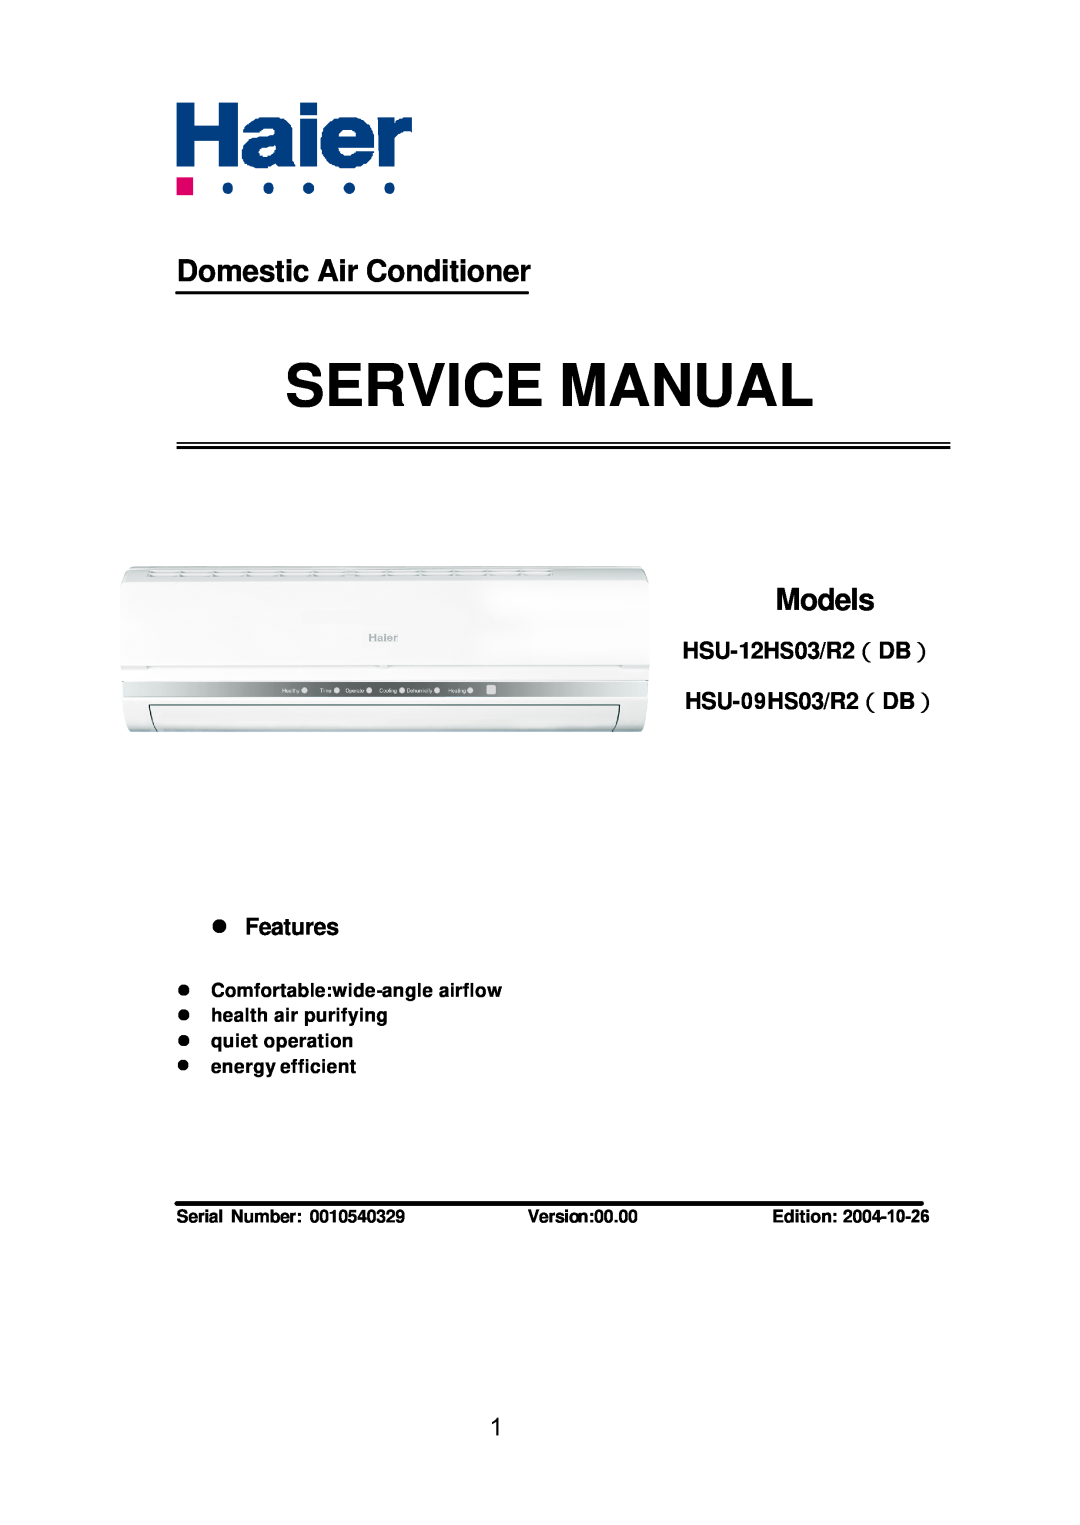 Haier HSU-12HS03/R2DB service manual Domestic Air Conditioner, Models, HSU-12HS03/R2（DB） HSU-09HS03/R2（DB） Features 